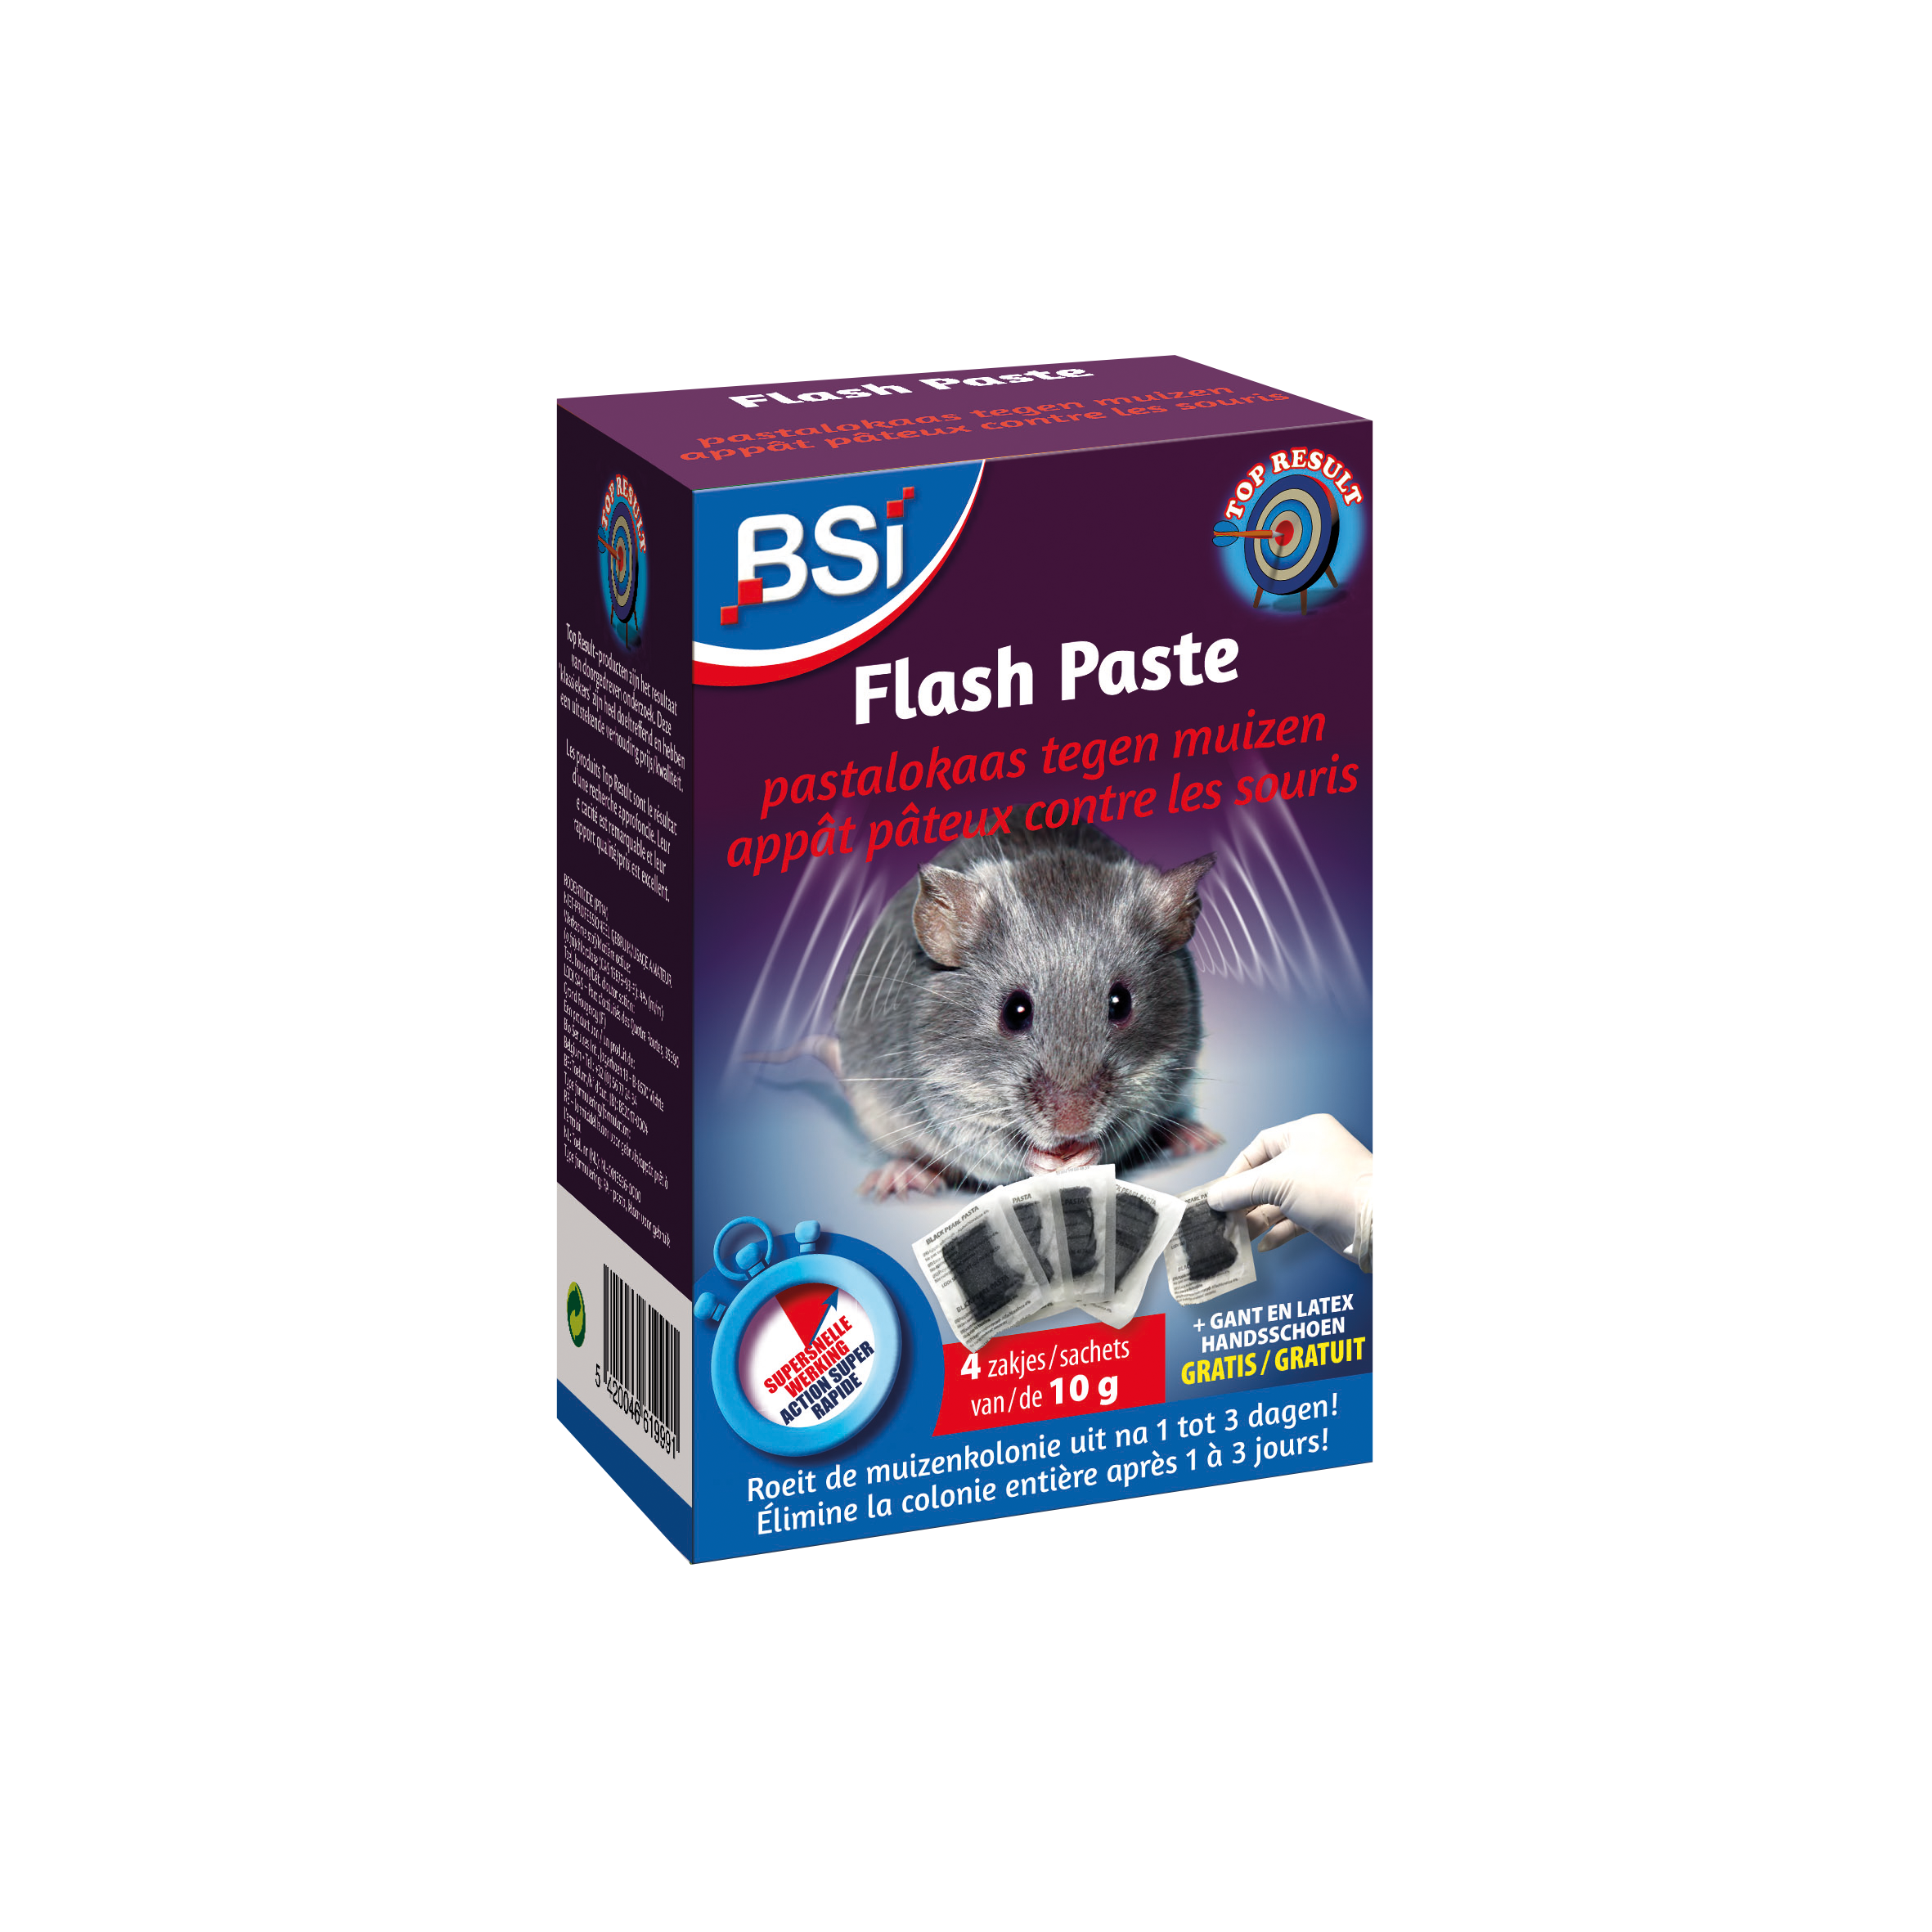 BSI Flash Paste BE/FR/LUX 4 x 10 g image